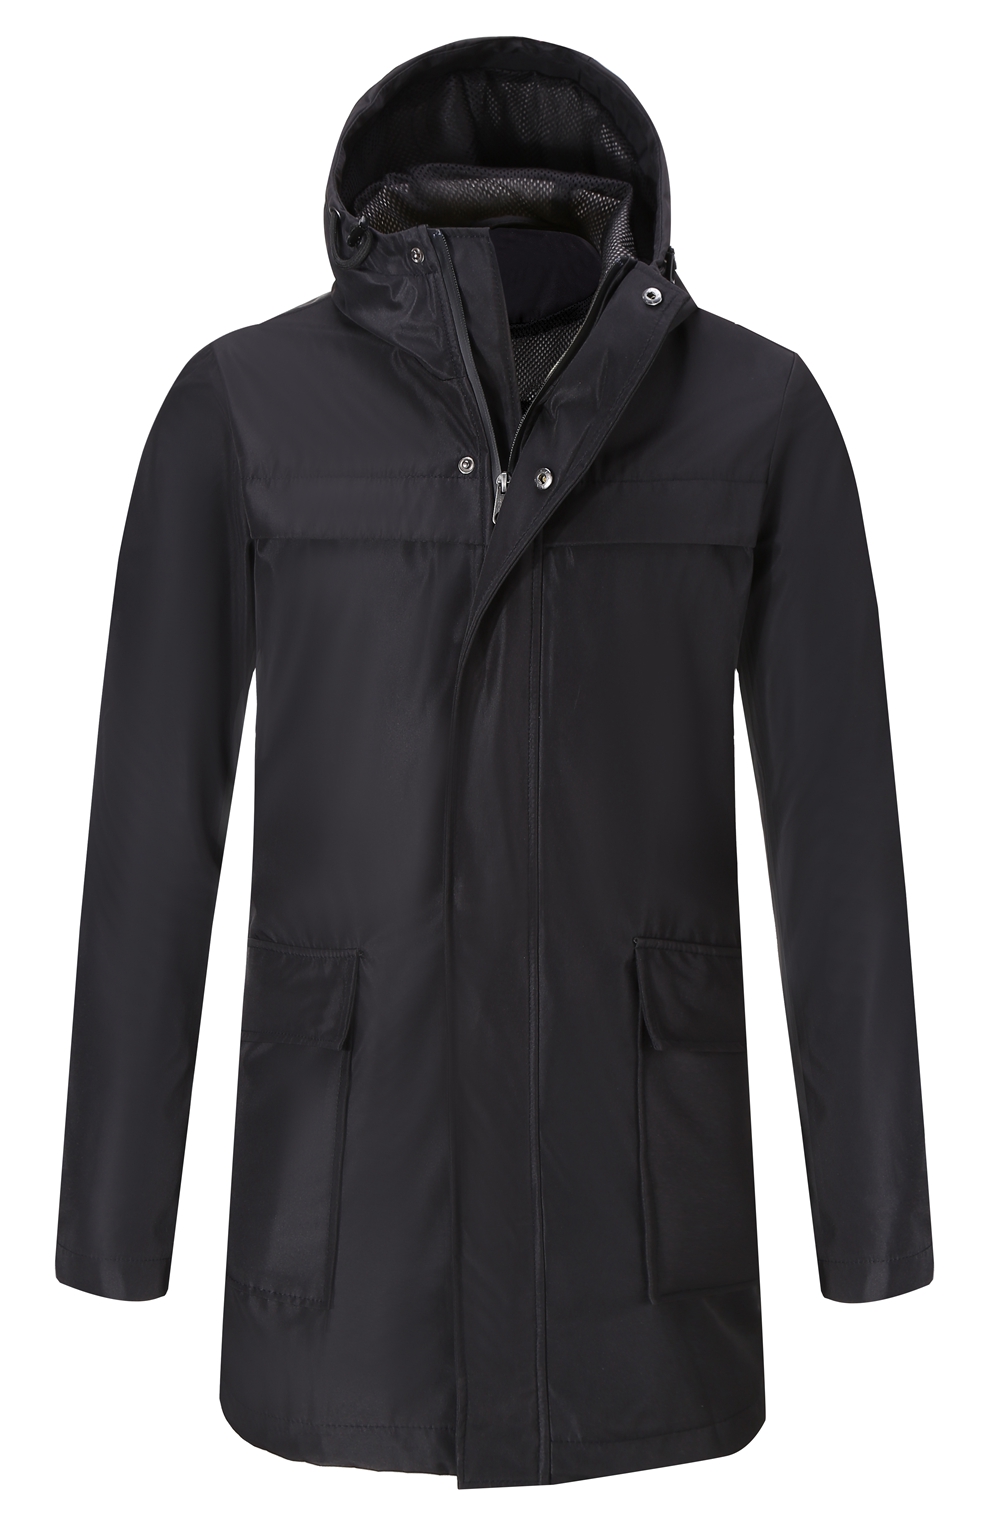 Men's Casual Jacket Waterproof Breathable Hooded Lightweight Rain ...